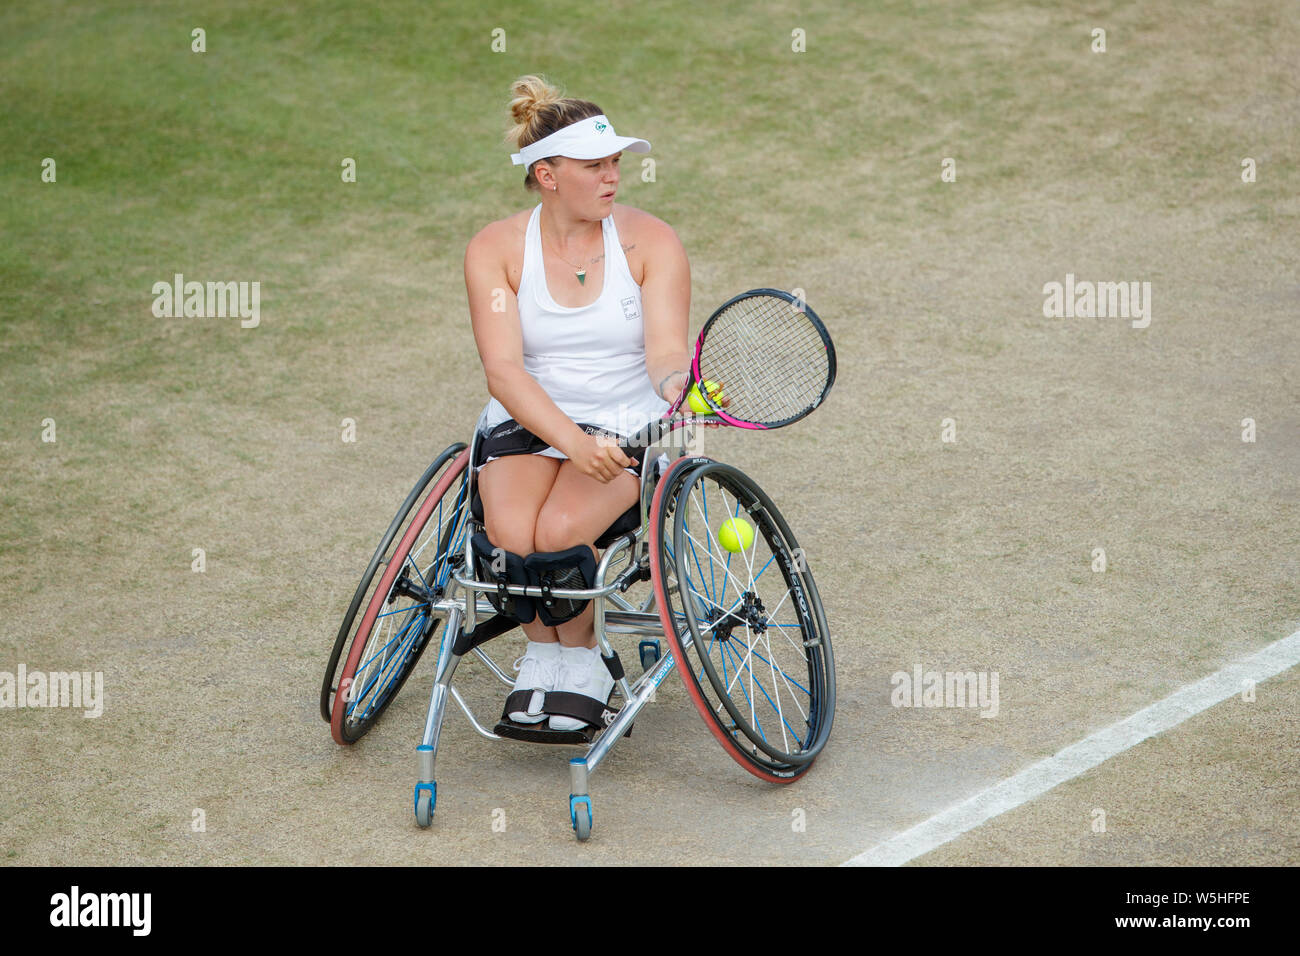 Jordanne Whiley di GB giocare tennis in carrozzina ai campionati , Wimbledon 2019 Foto Stock